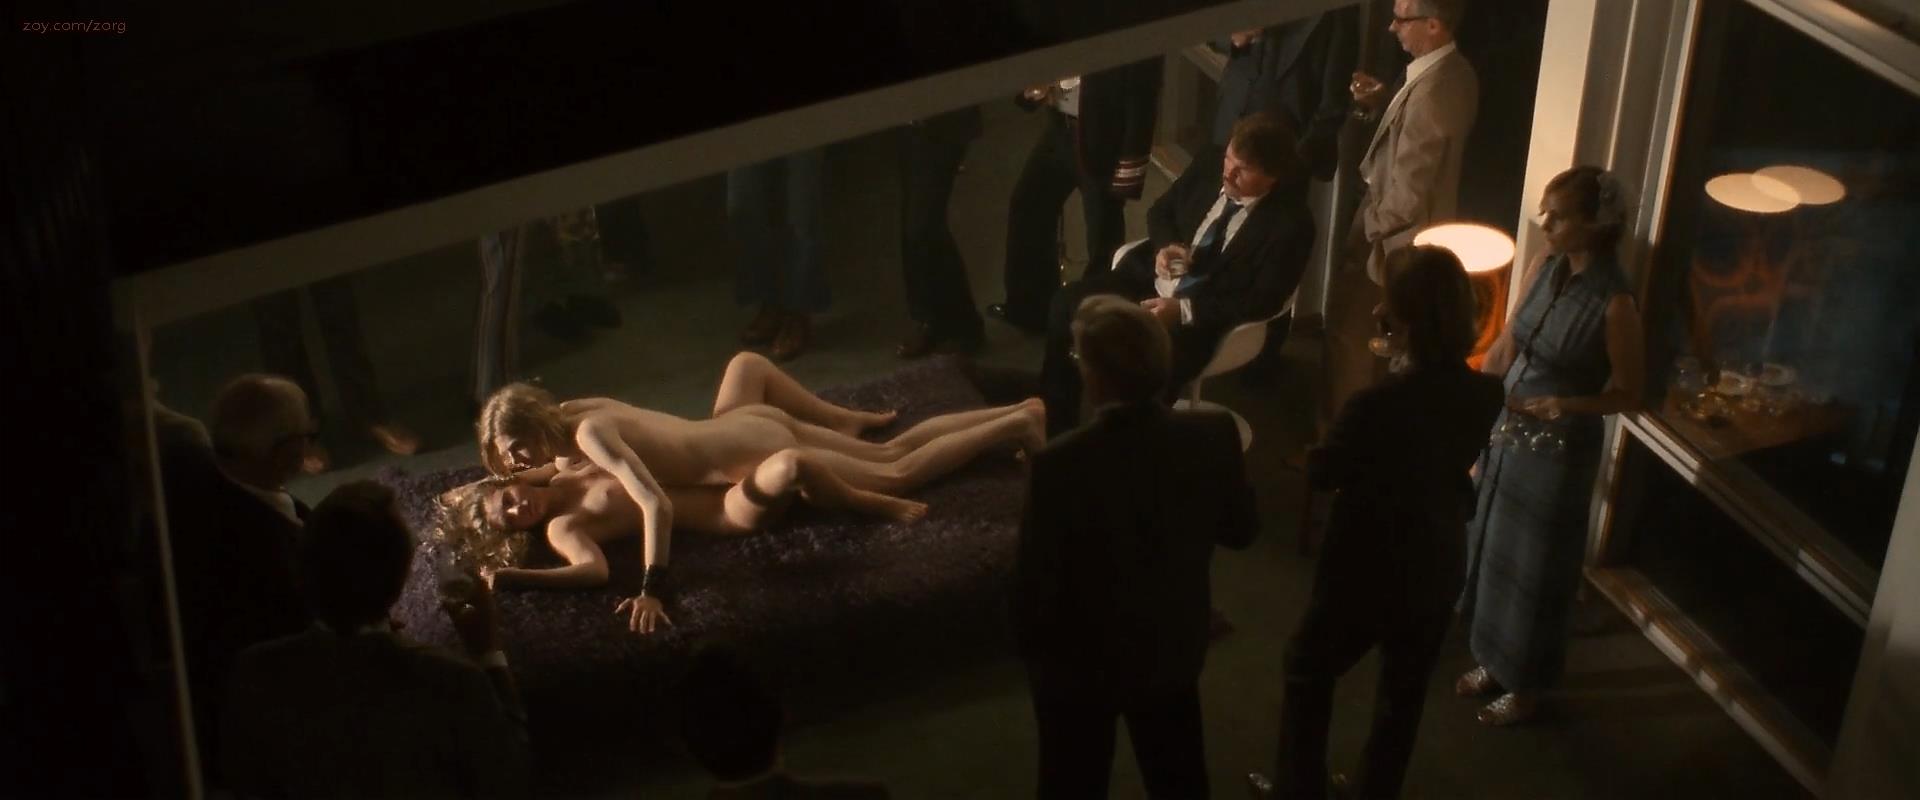 Sofia Karemyr and Josefin Asplund nude sex topless - Call Girl (2012) hd1080p